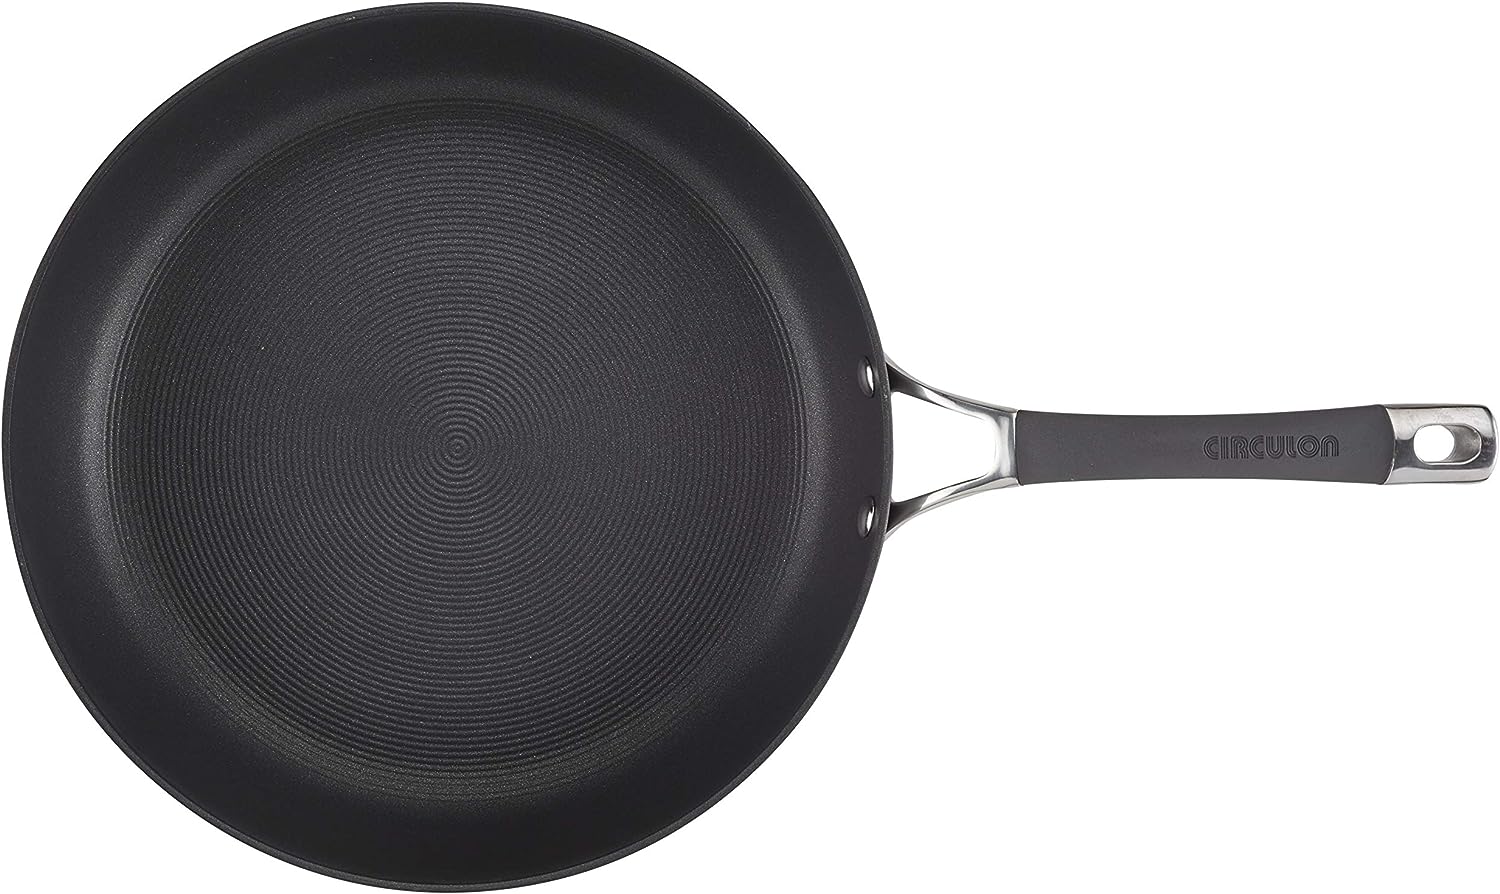 Circulon 12 Inch Fry Pan